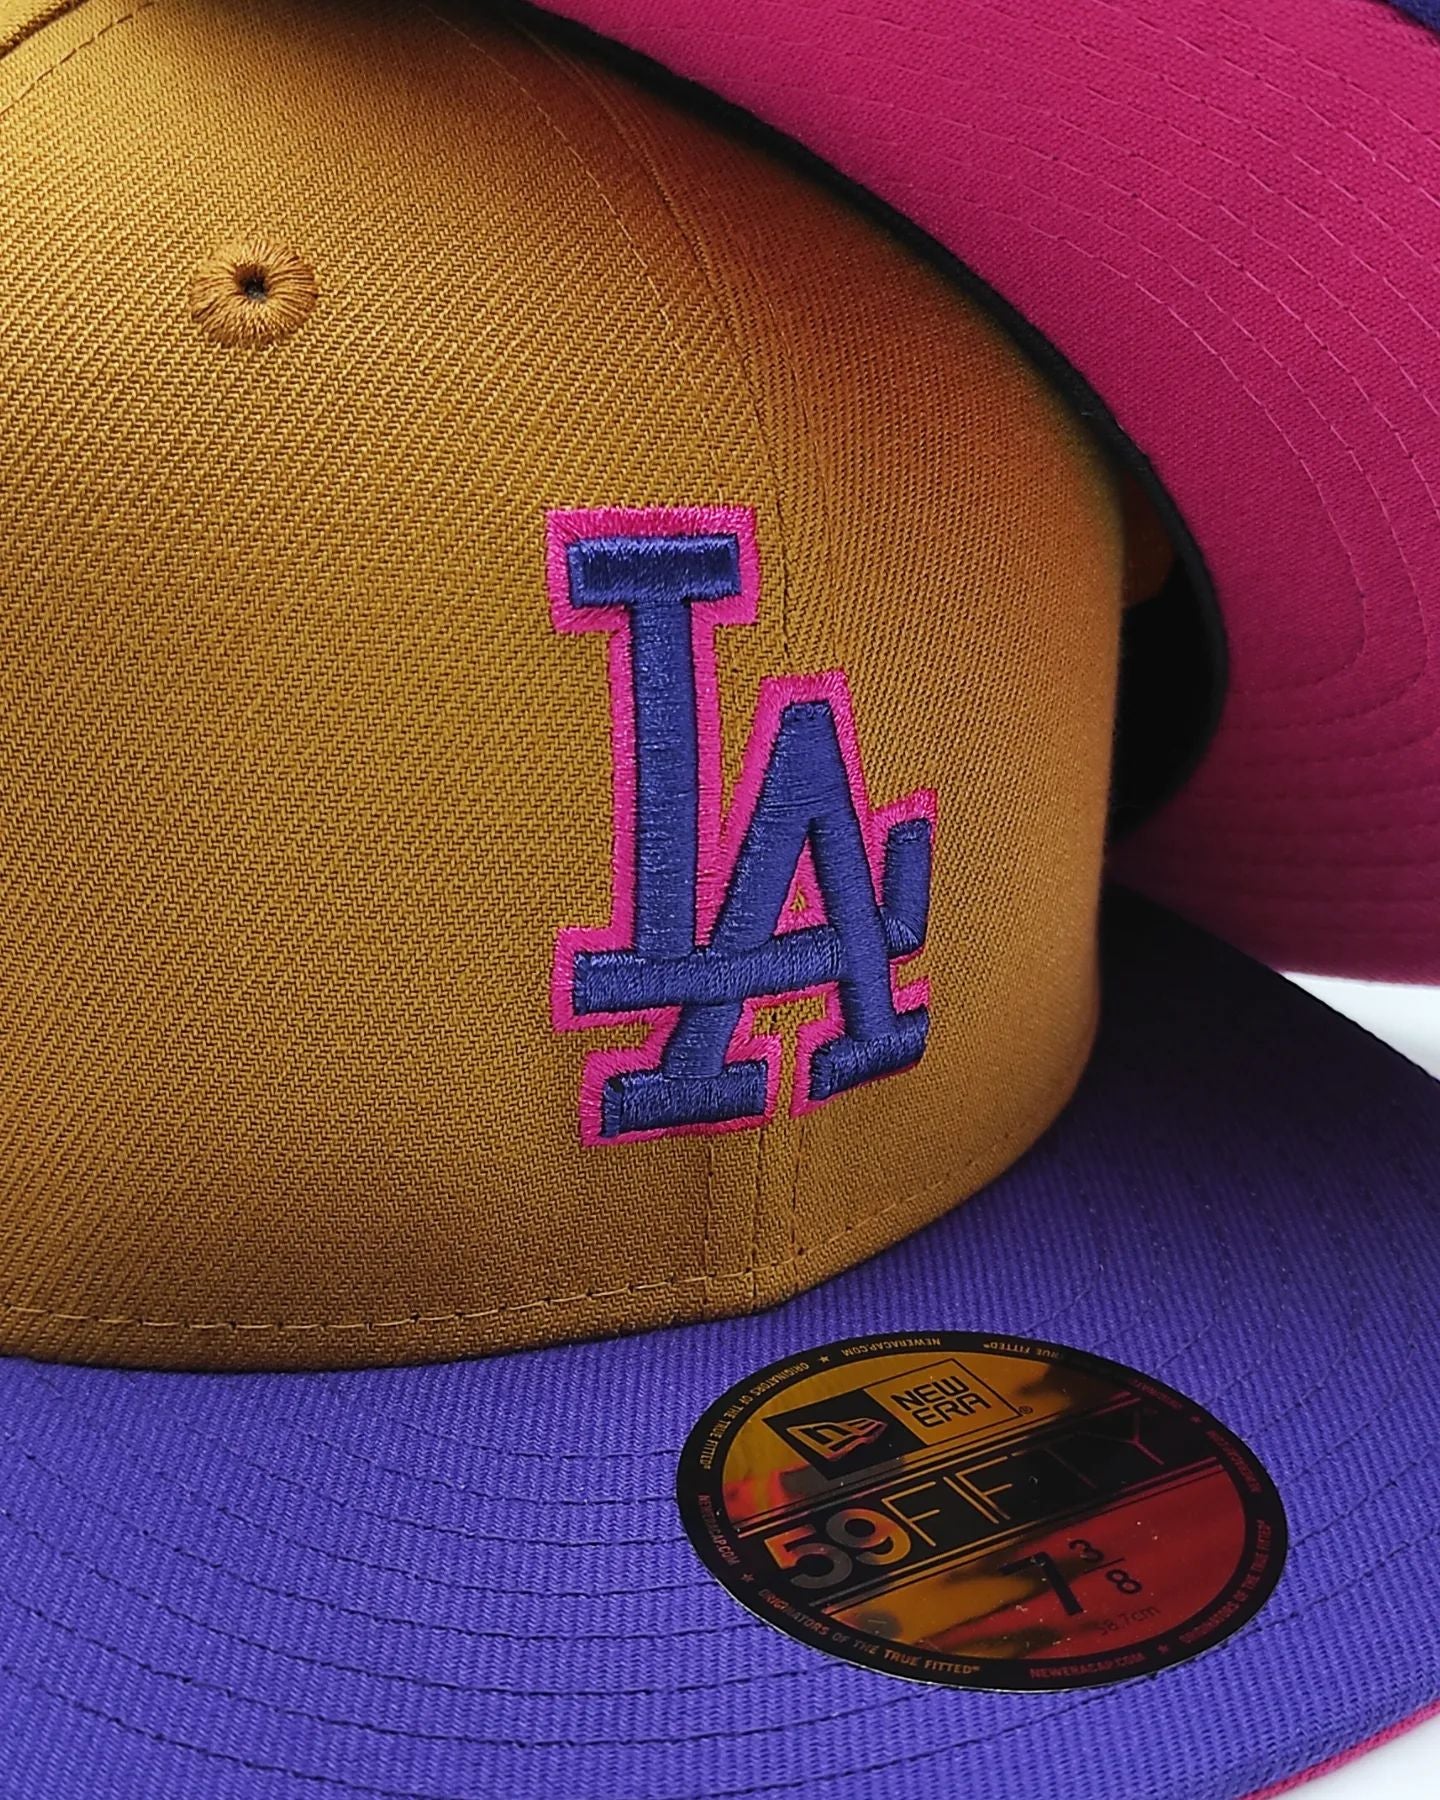 New Era Eclusiva 59FIFTY parks hot Valley Los Angeles Dodgers 40TH Aniversario STADIUM patch hat - Bronceado, Purpura